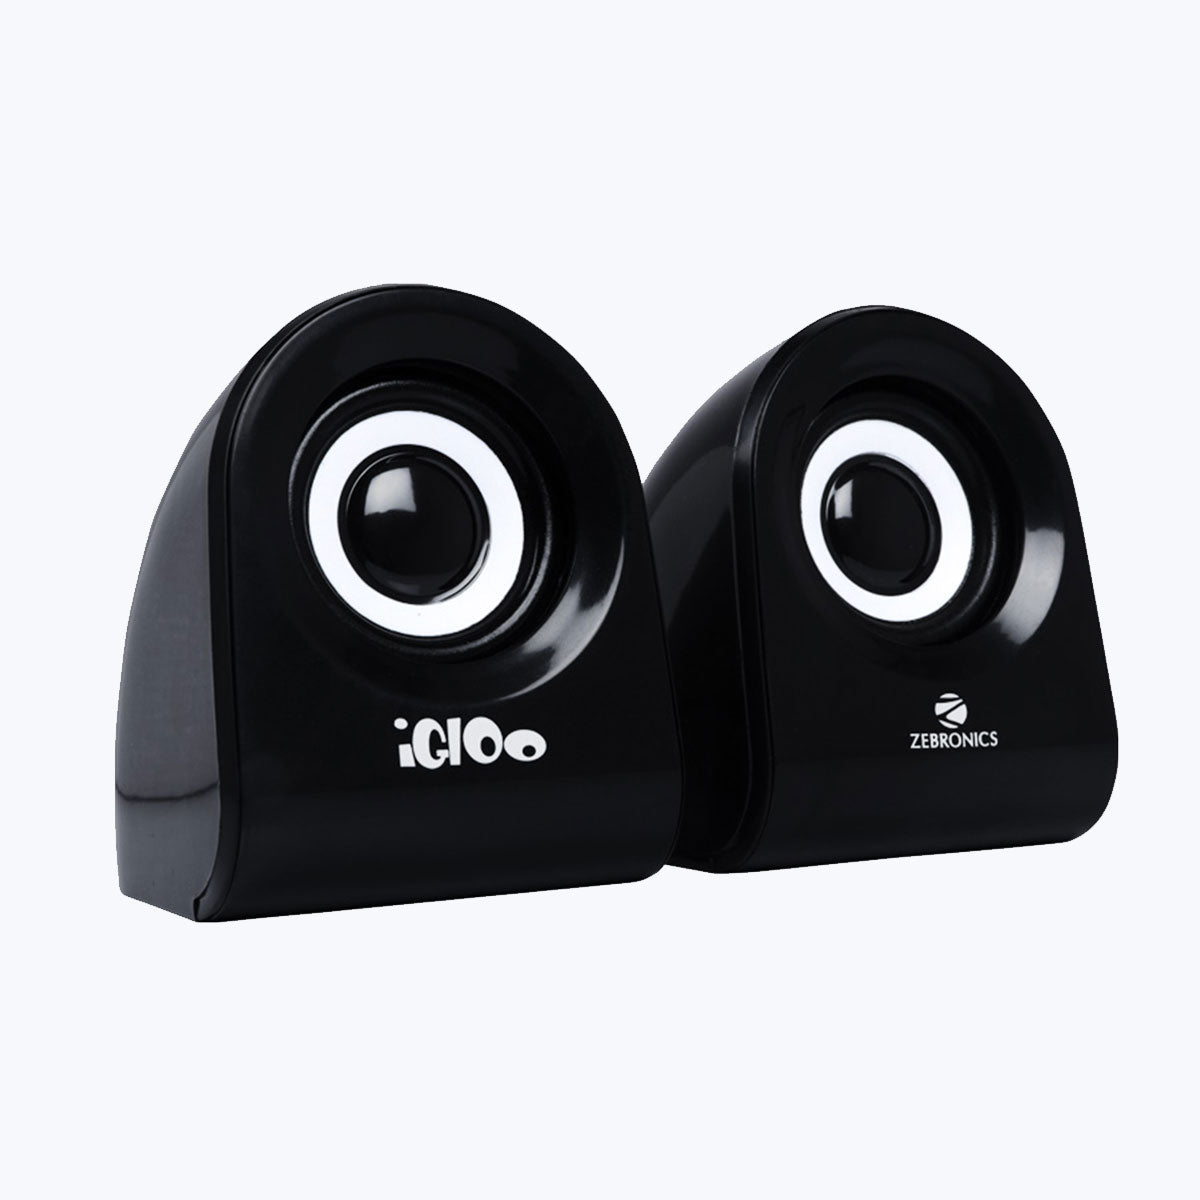 Igloo - 2.0 Speakers - Zebronics